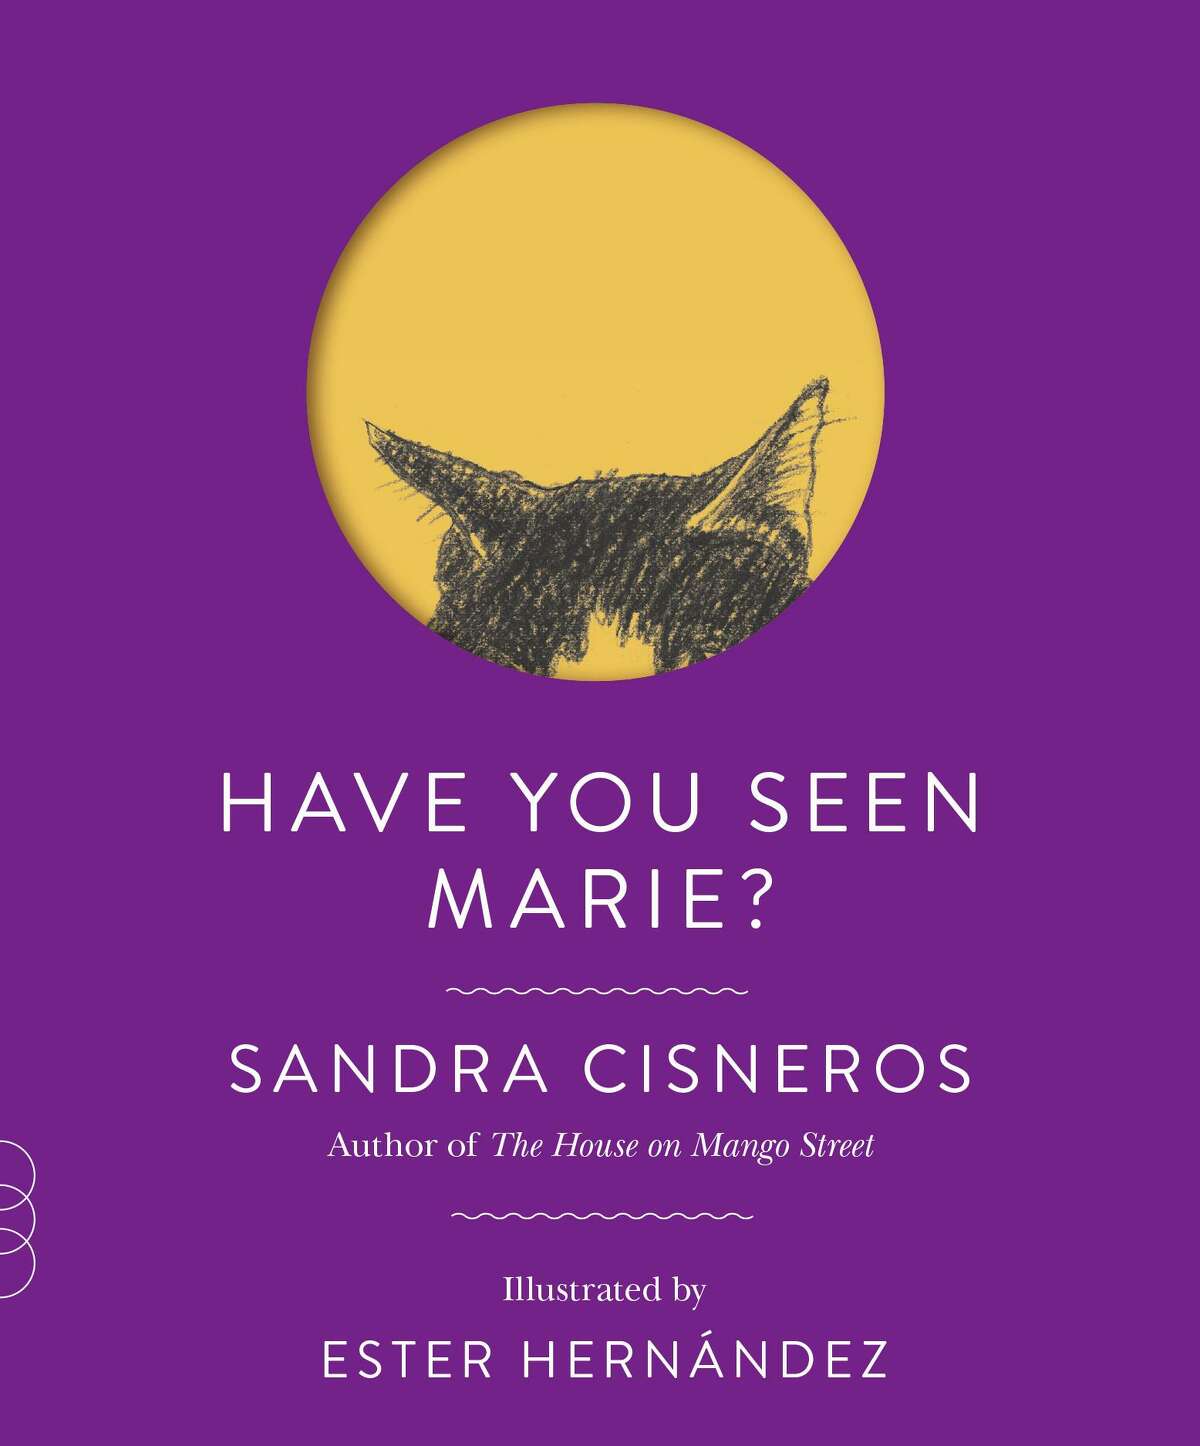 You see maria. The House on Mango Street Sandra Cisneros книга.